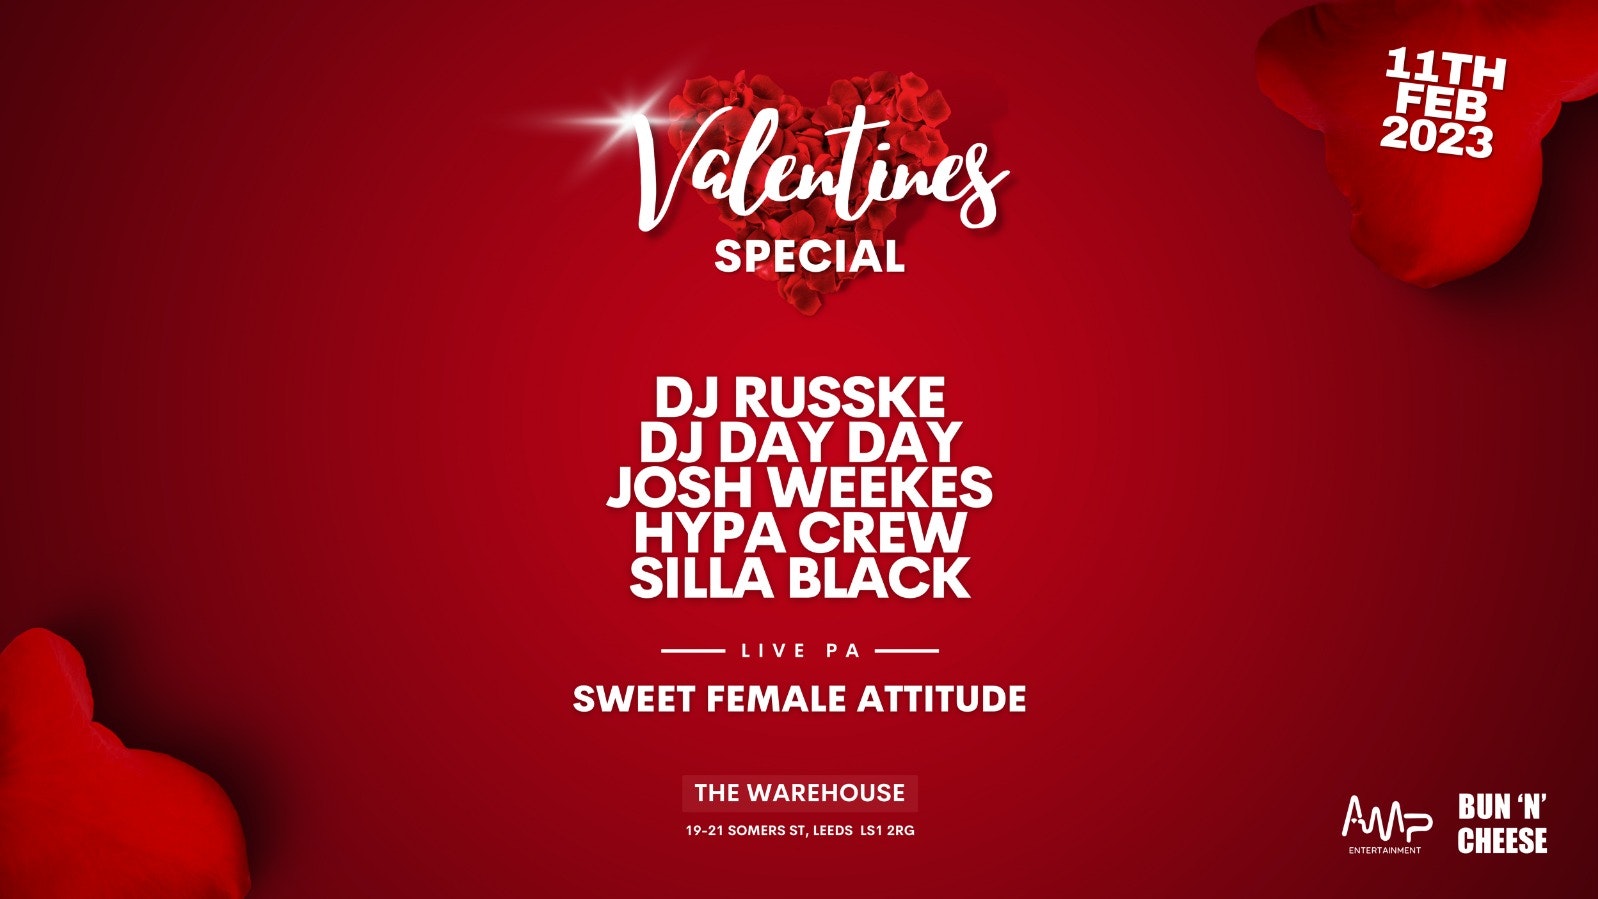 Valentines special – DJ Russke